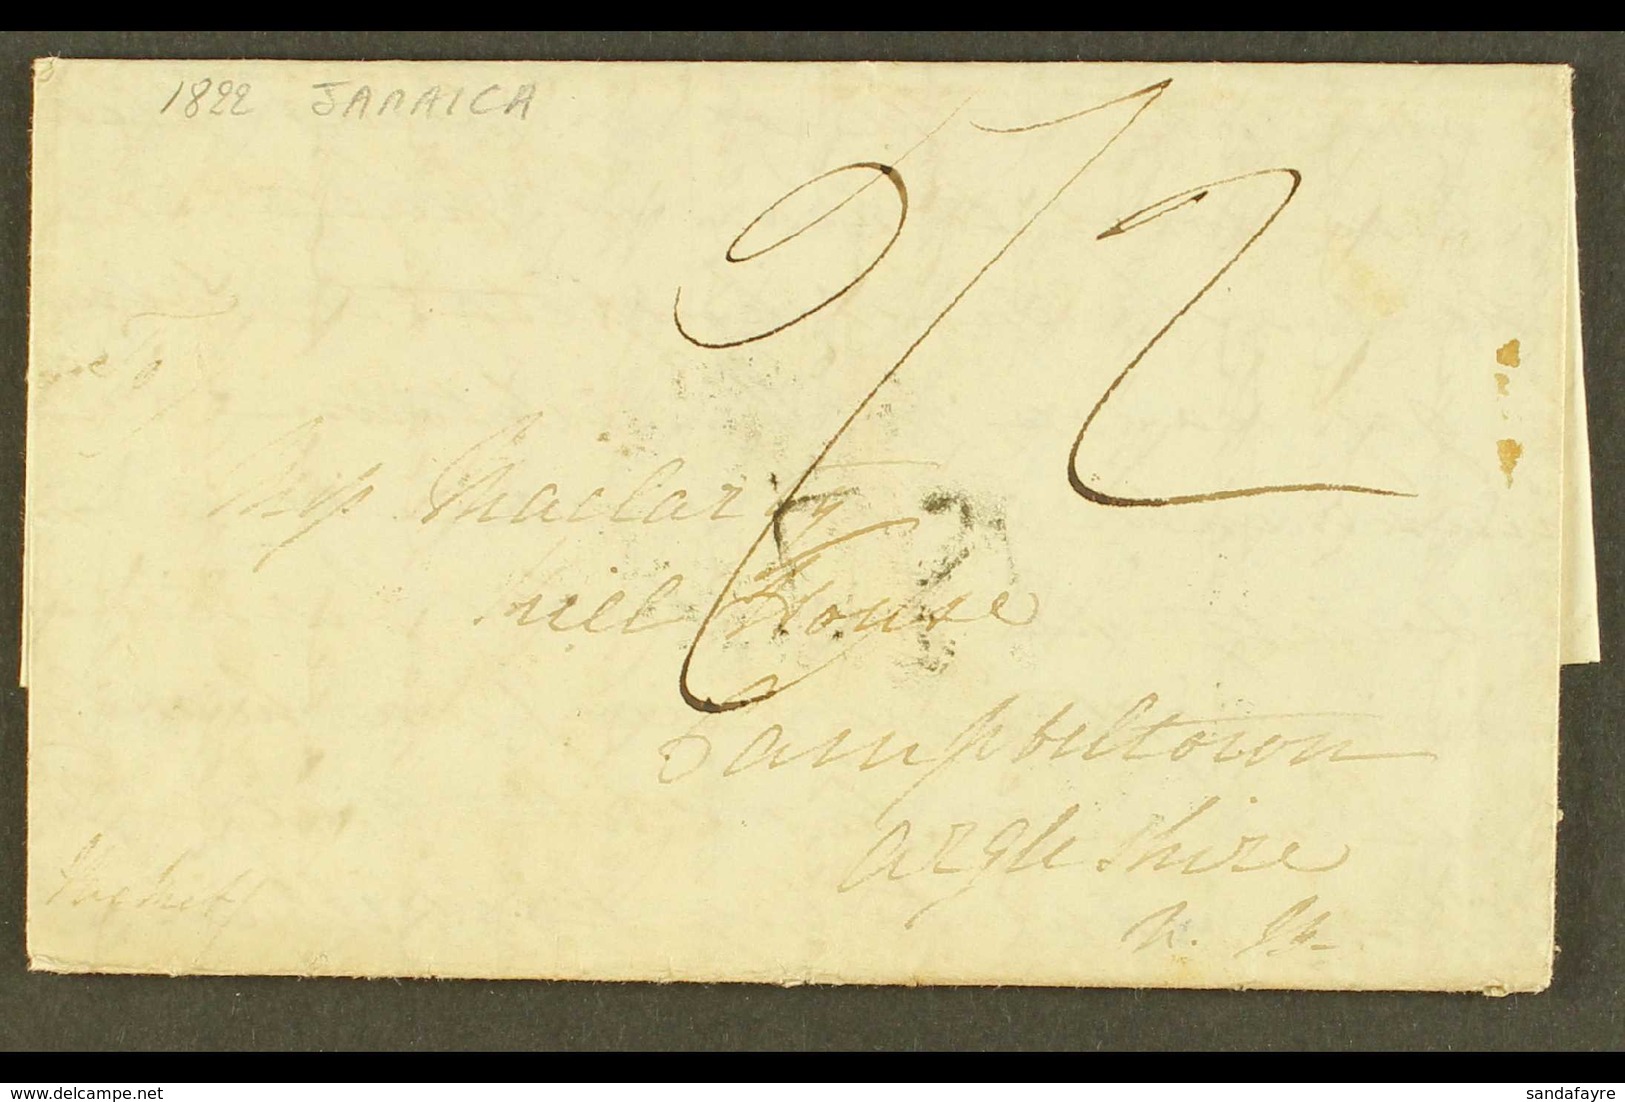 1822 FLEURON ON ENTIRE TO SCOTLAND "PR PACKET ST ANN"  (Feb) Lengthy Letter Showing Clear But Feint Cancel. Glasgow Arri - Jamaica (...-1961)